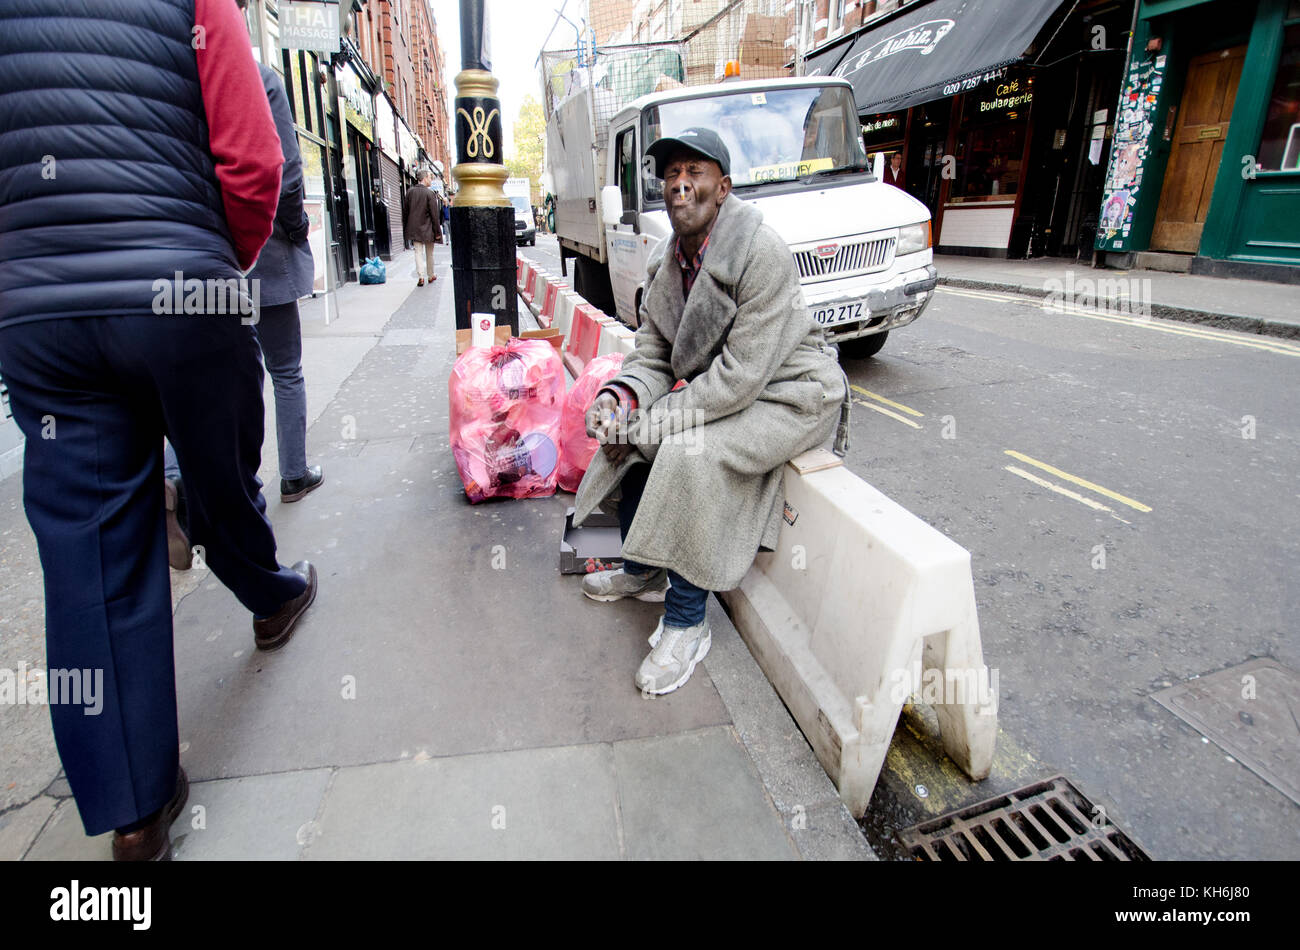 London, England, UK. Man smoking in the street Stock Photo